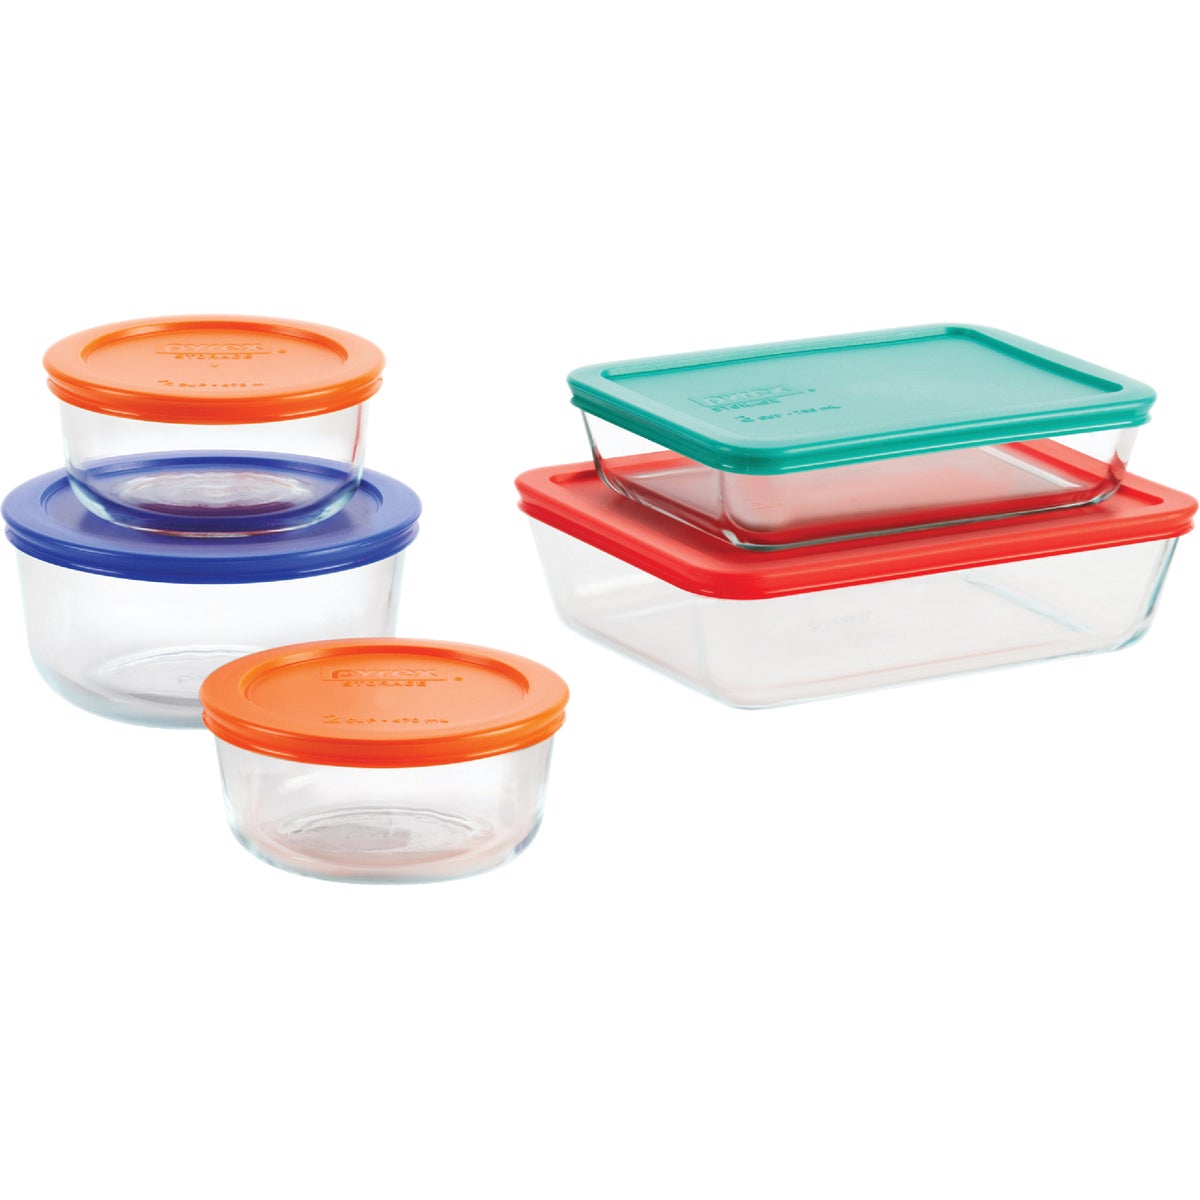 Pyrex Simply Store Glass Storage Bakeware Set (10-Piece)